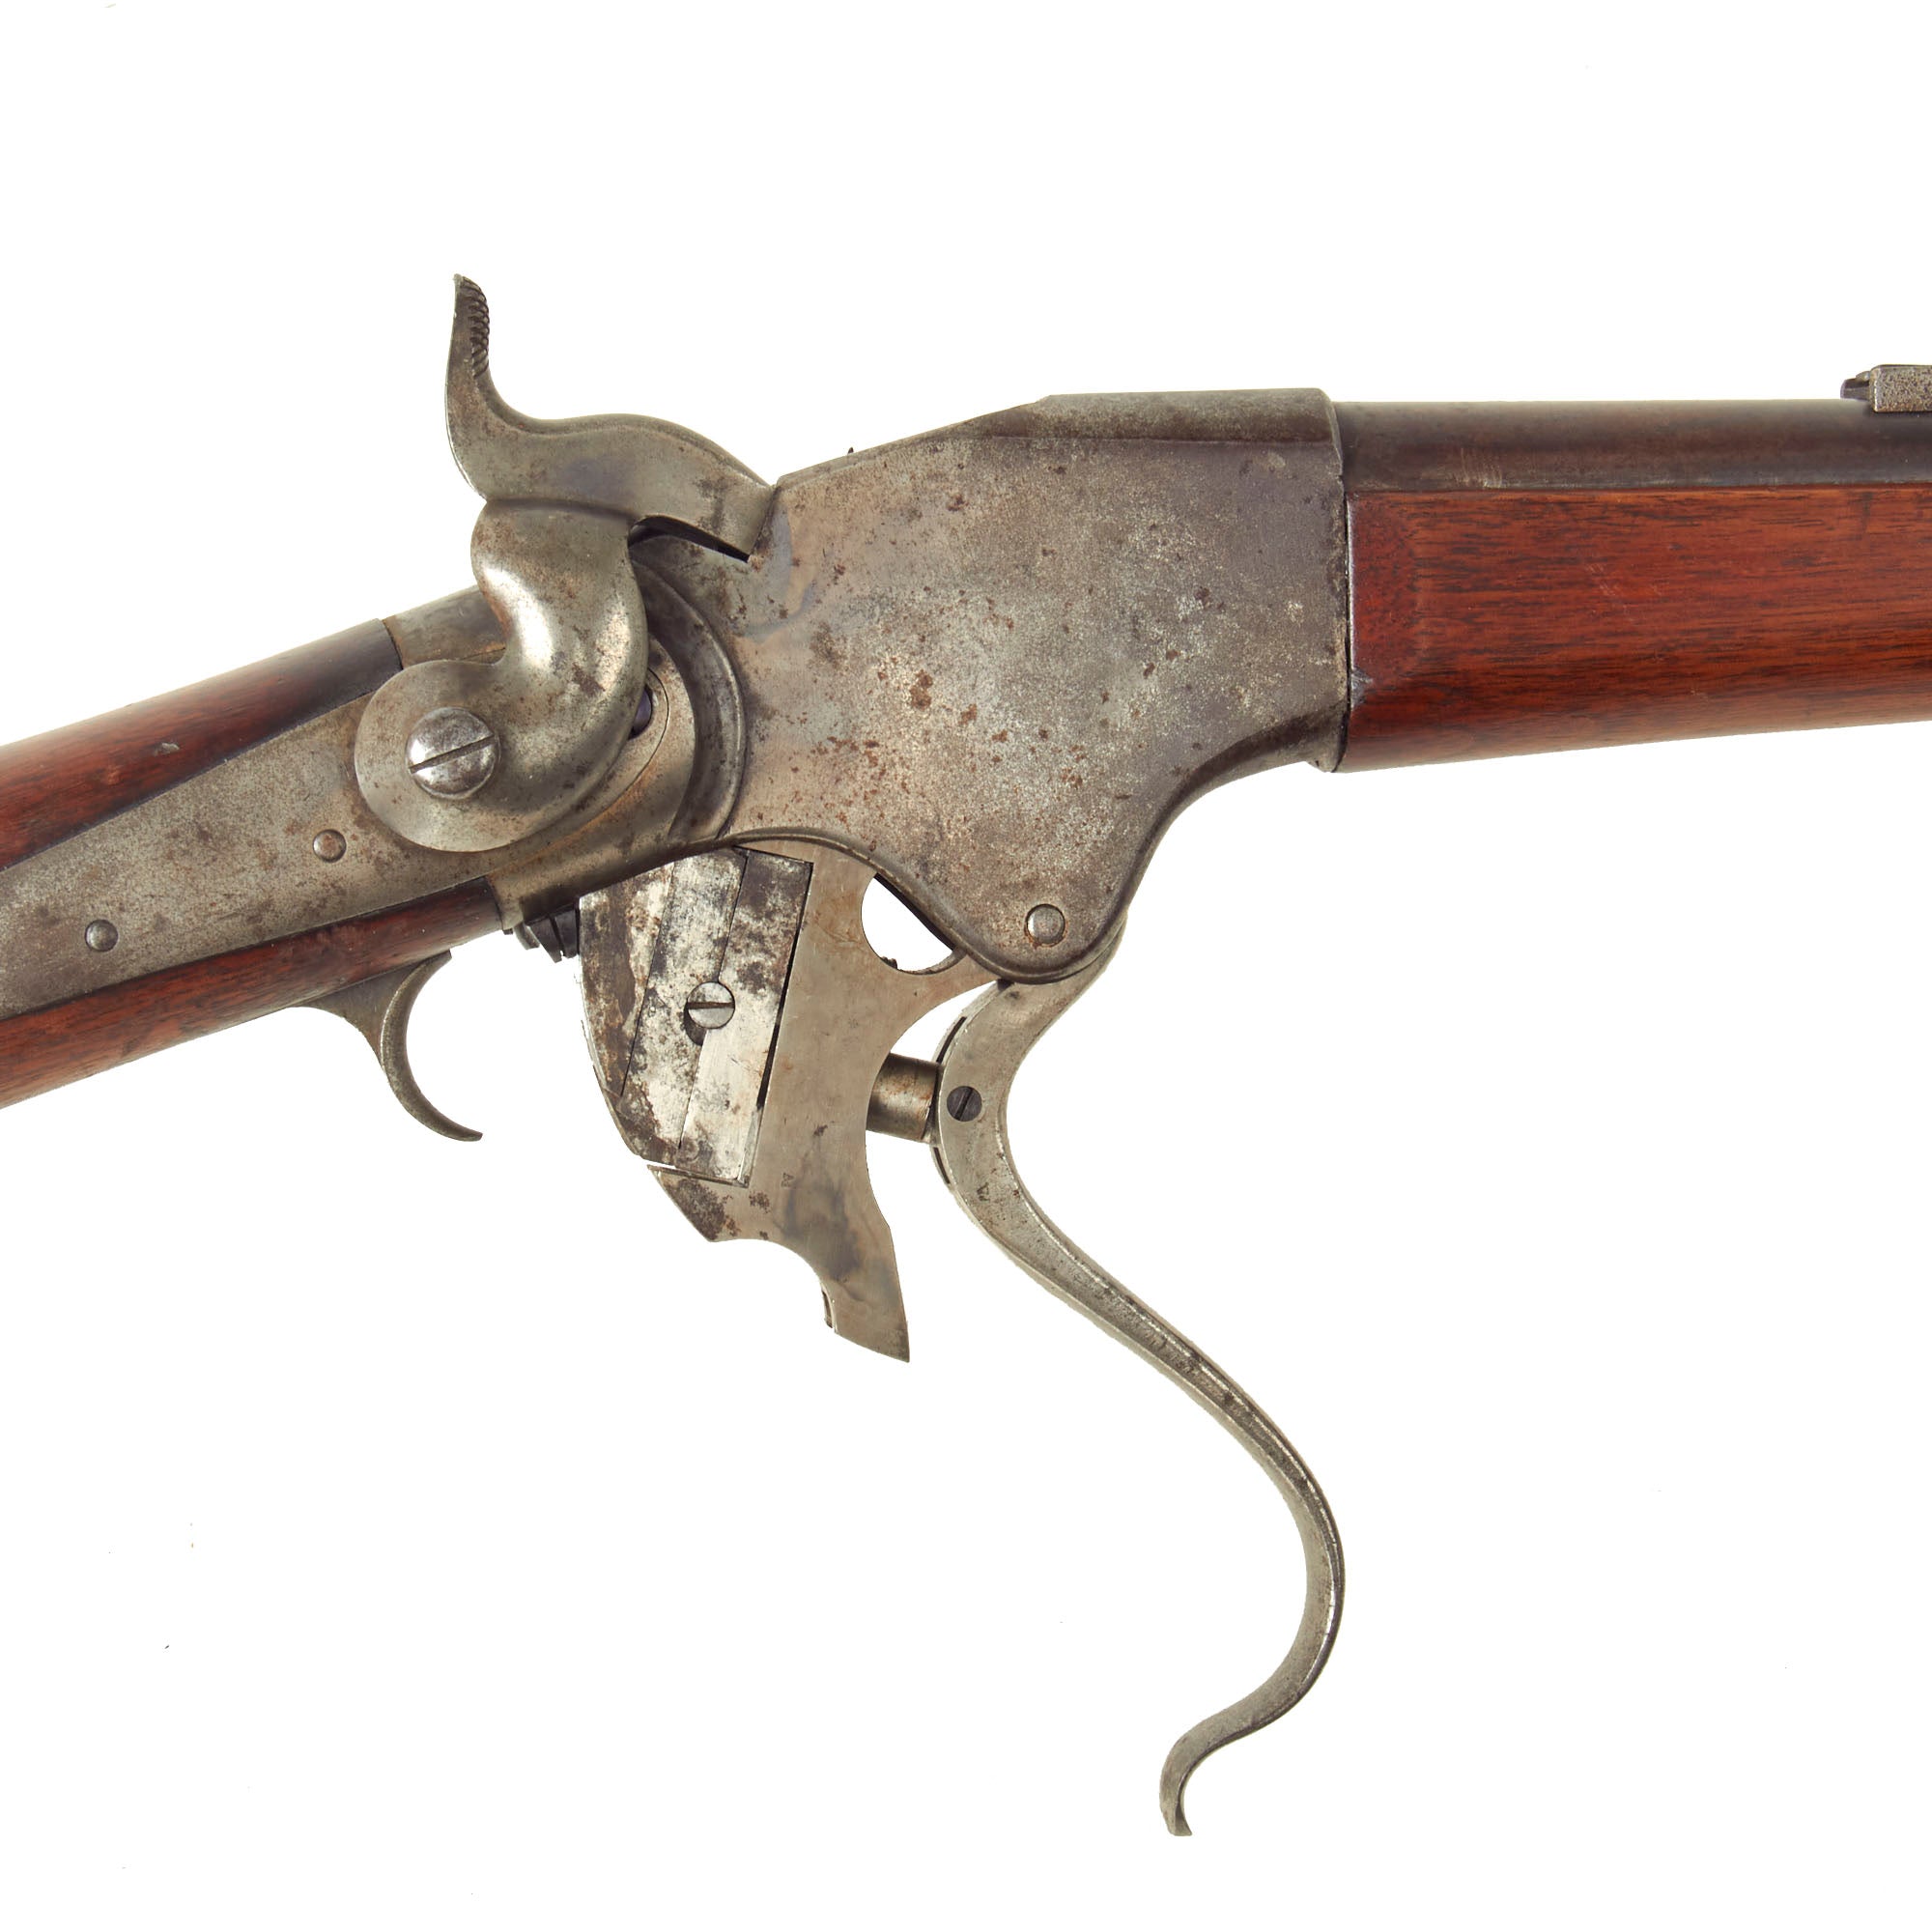 Original U.S. Burnside Rifle Company Spencer Model 1865 Repeating